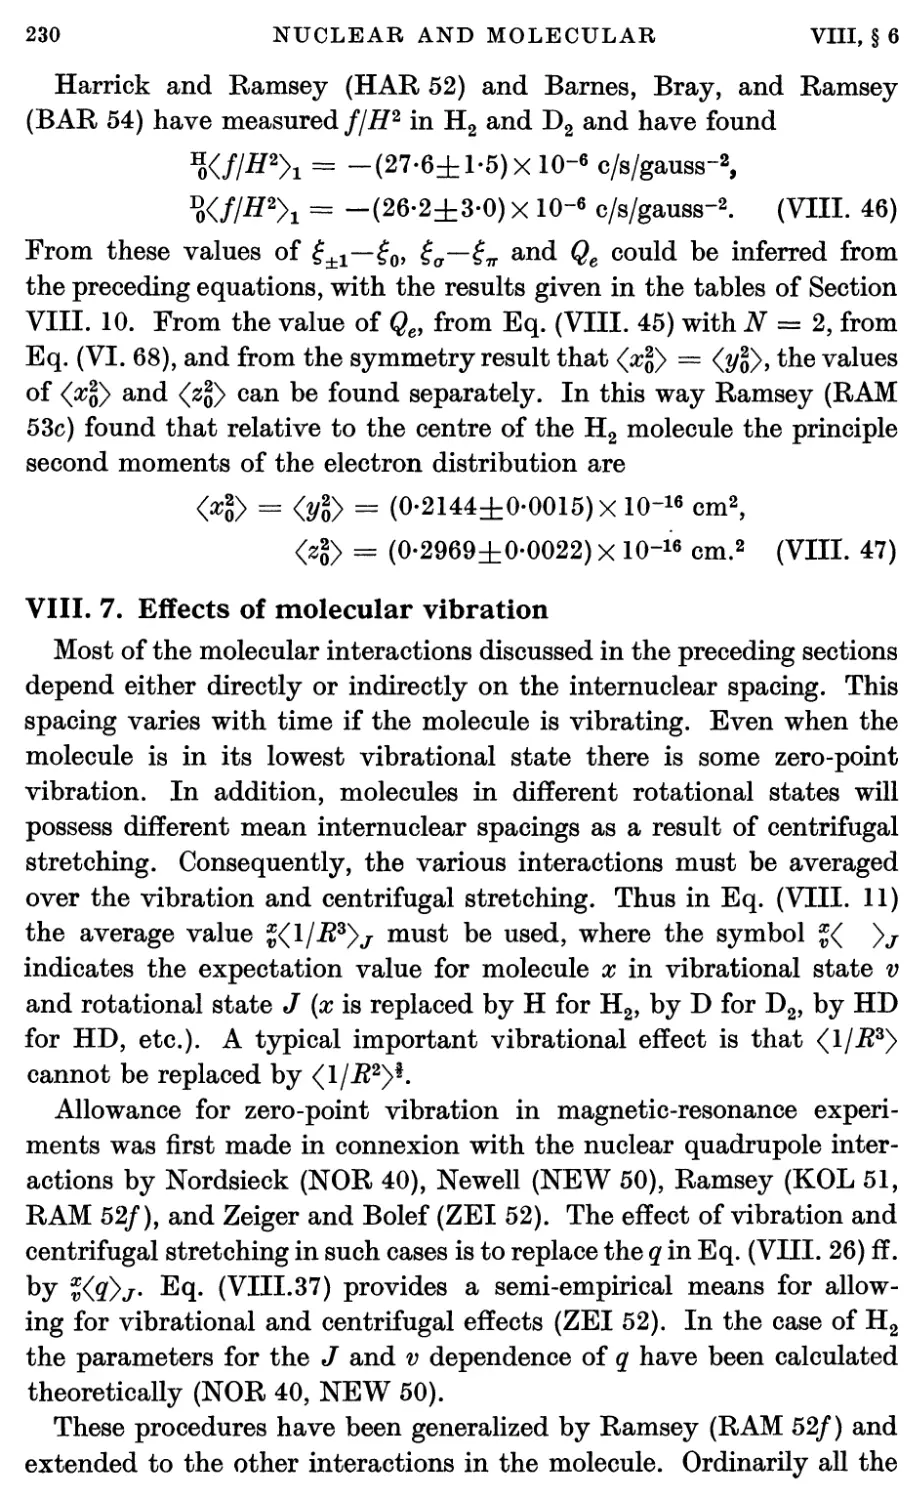 VIII.7. Effects of Molecular Vibration